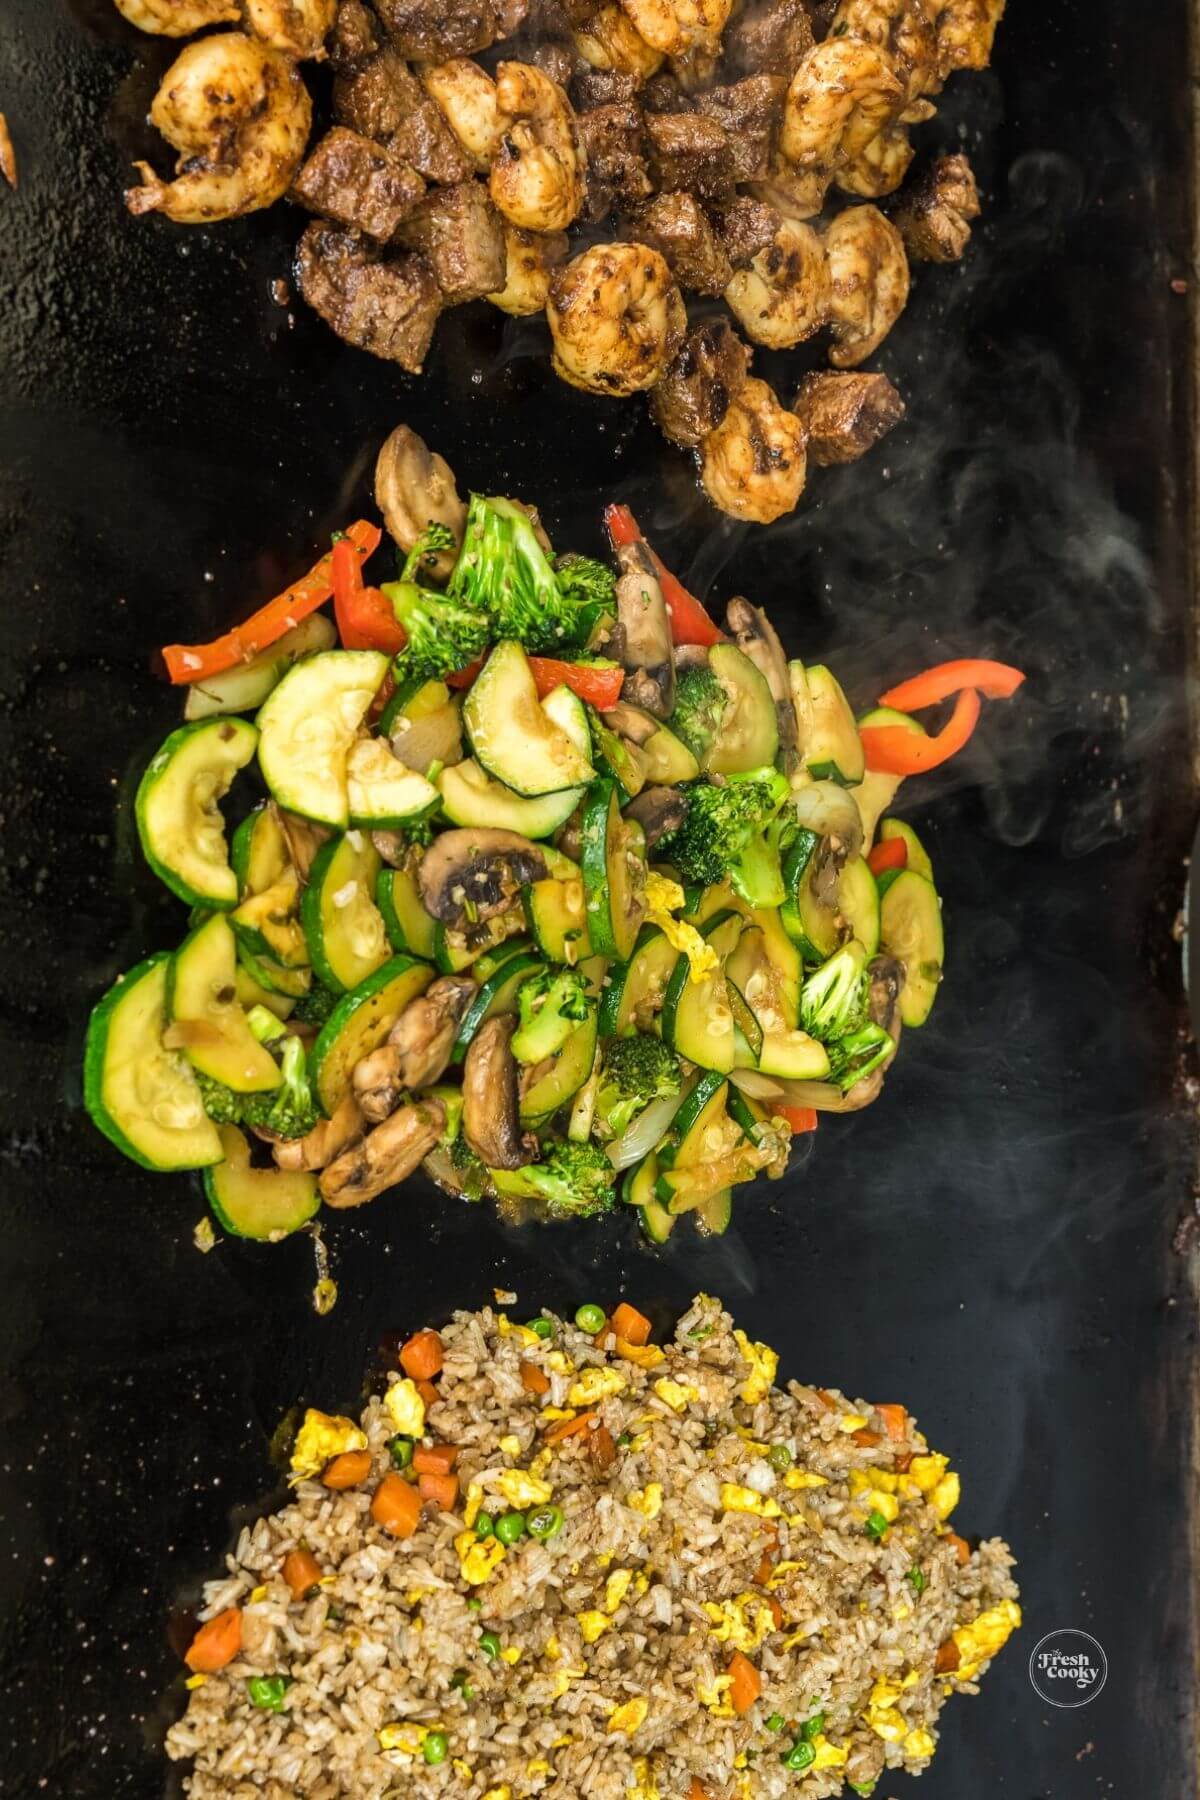 Steak shrimp, veggies and Benihana fried rice on Blackstone grill, ready to serve.